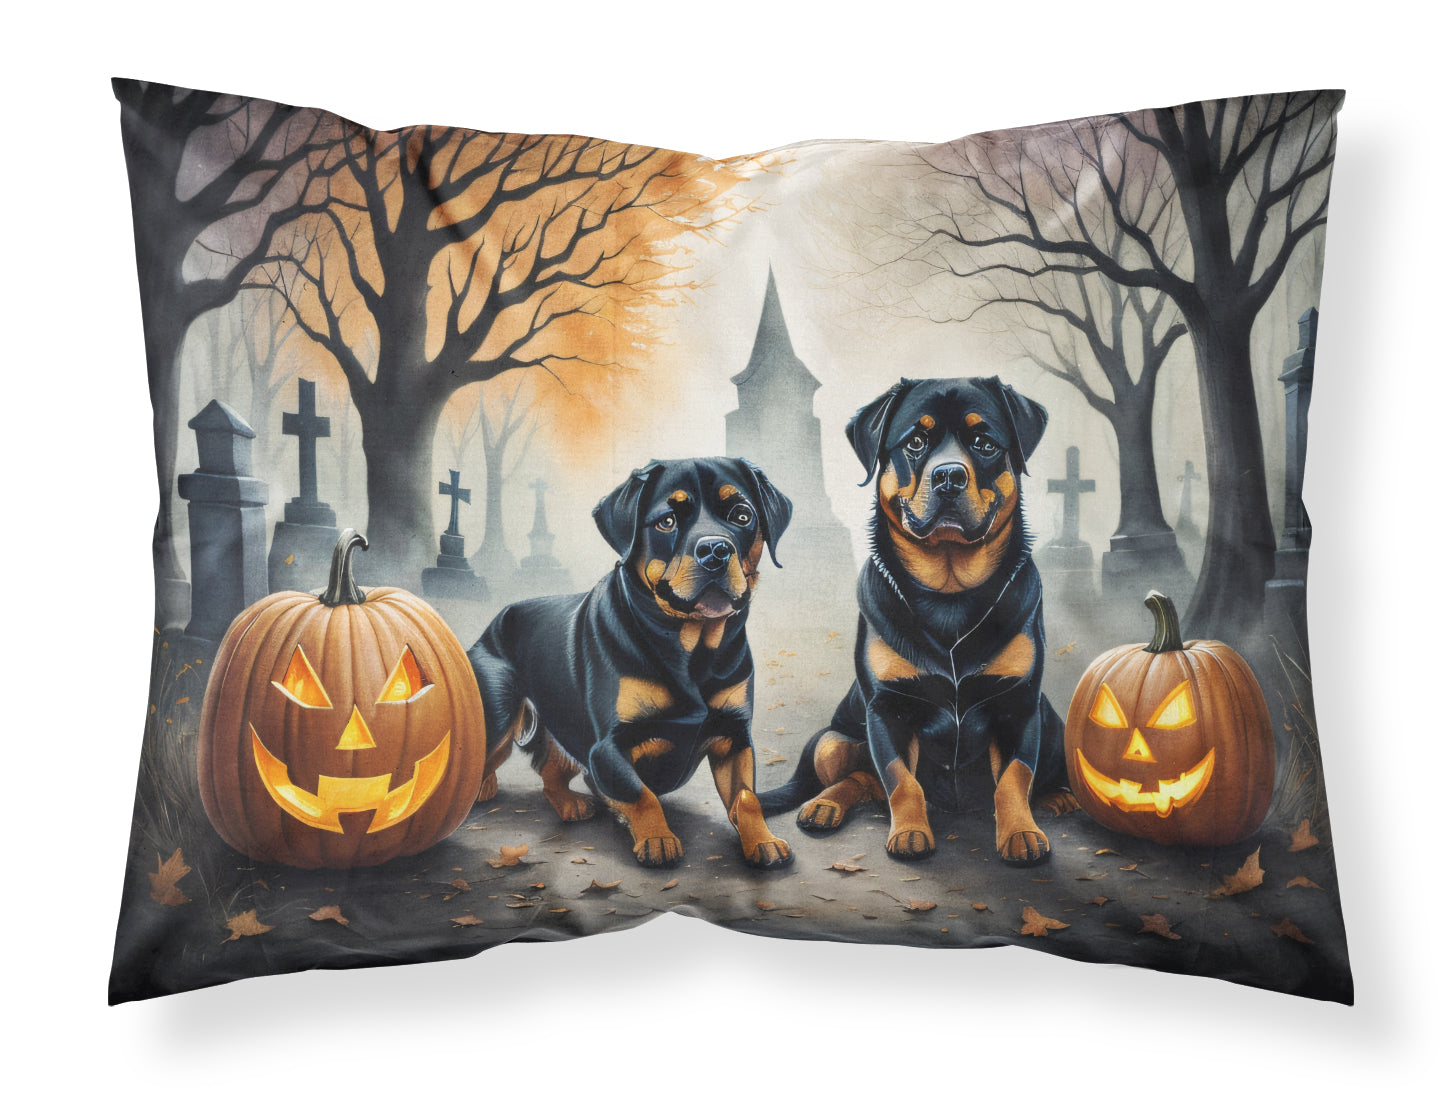 Buy this Rottweiler Spooky Halloween Fabric Standard Pillowcase